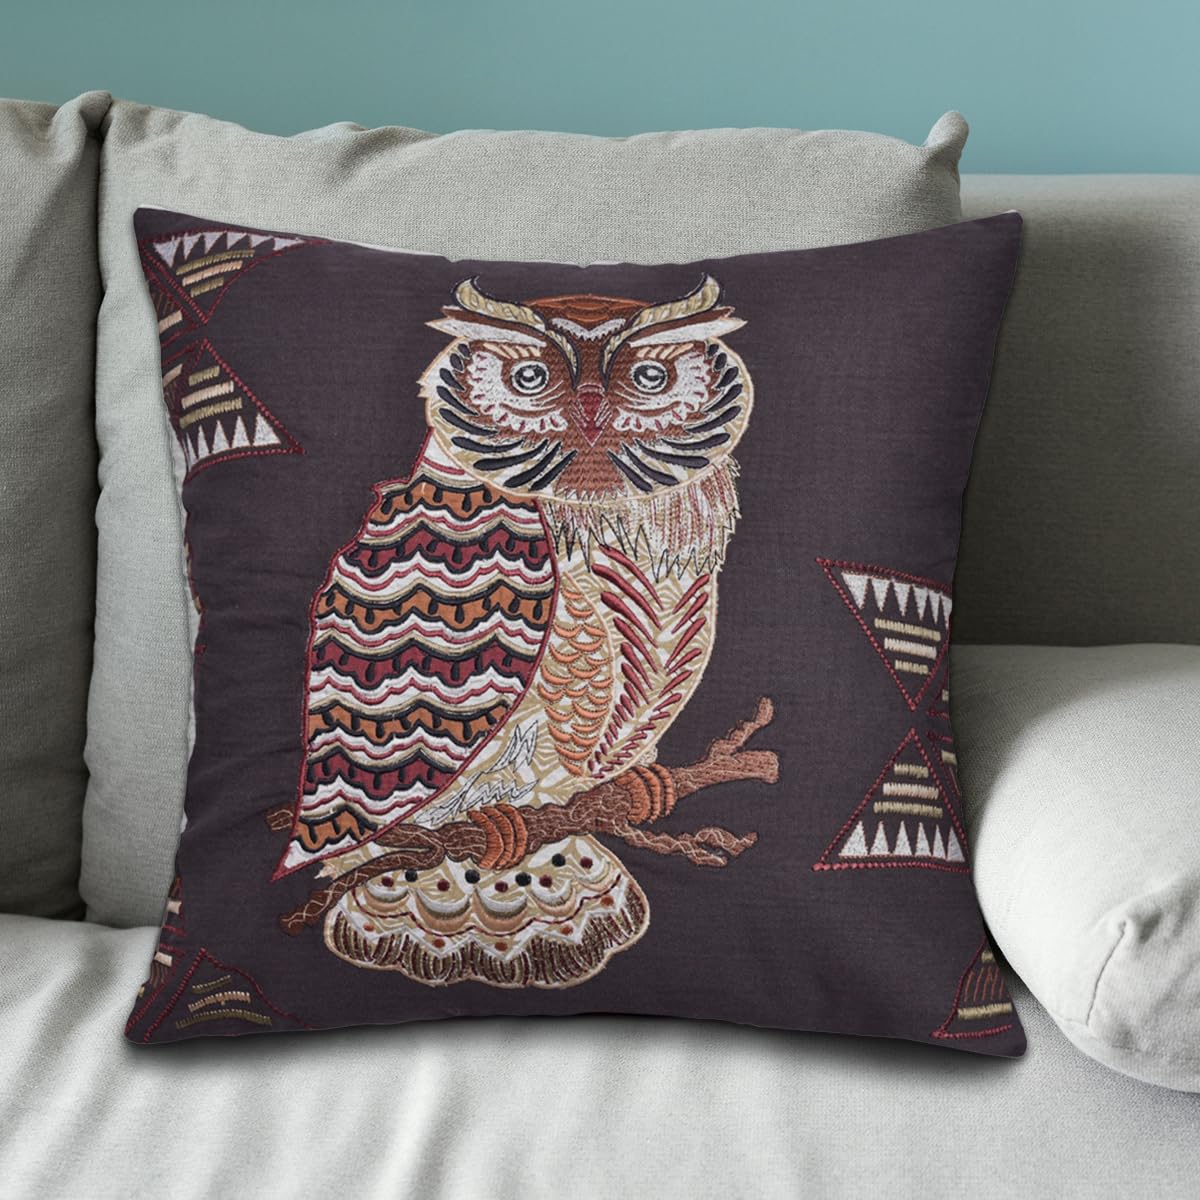 Owl Printed Design Throw Pillow Covers - Decozen